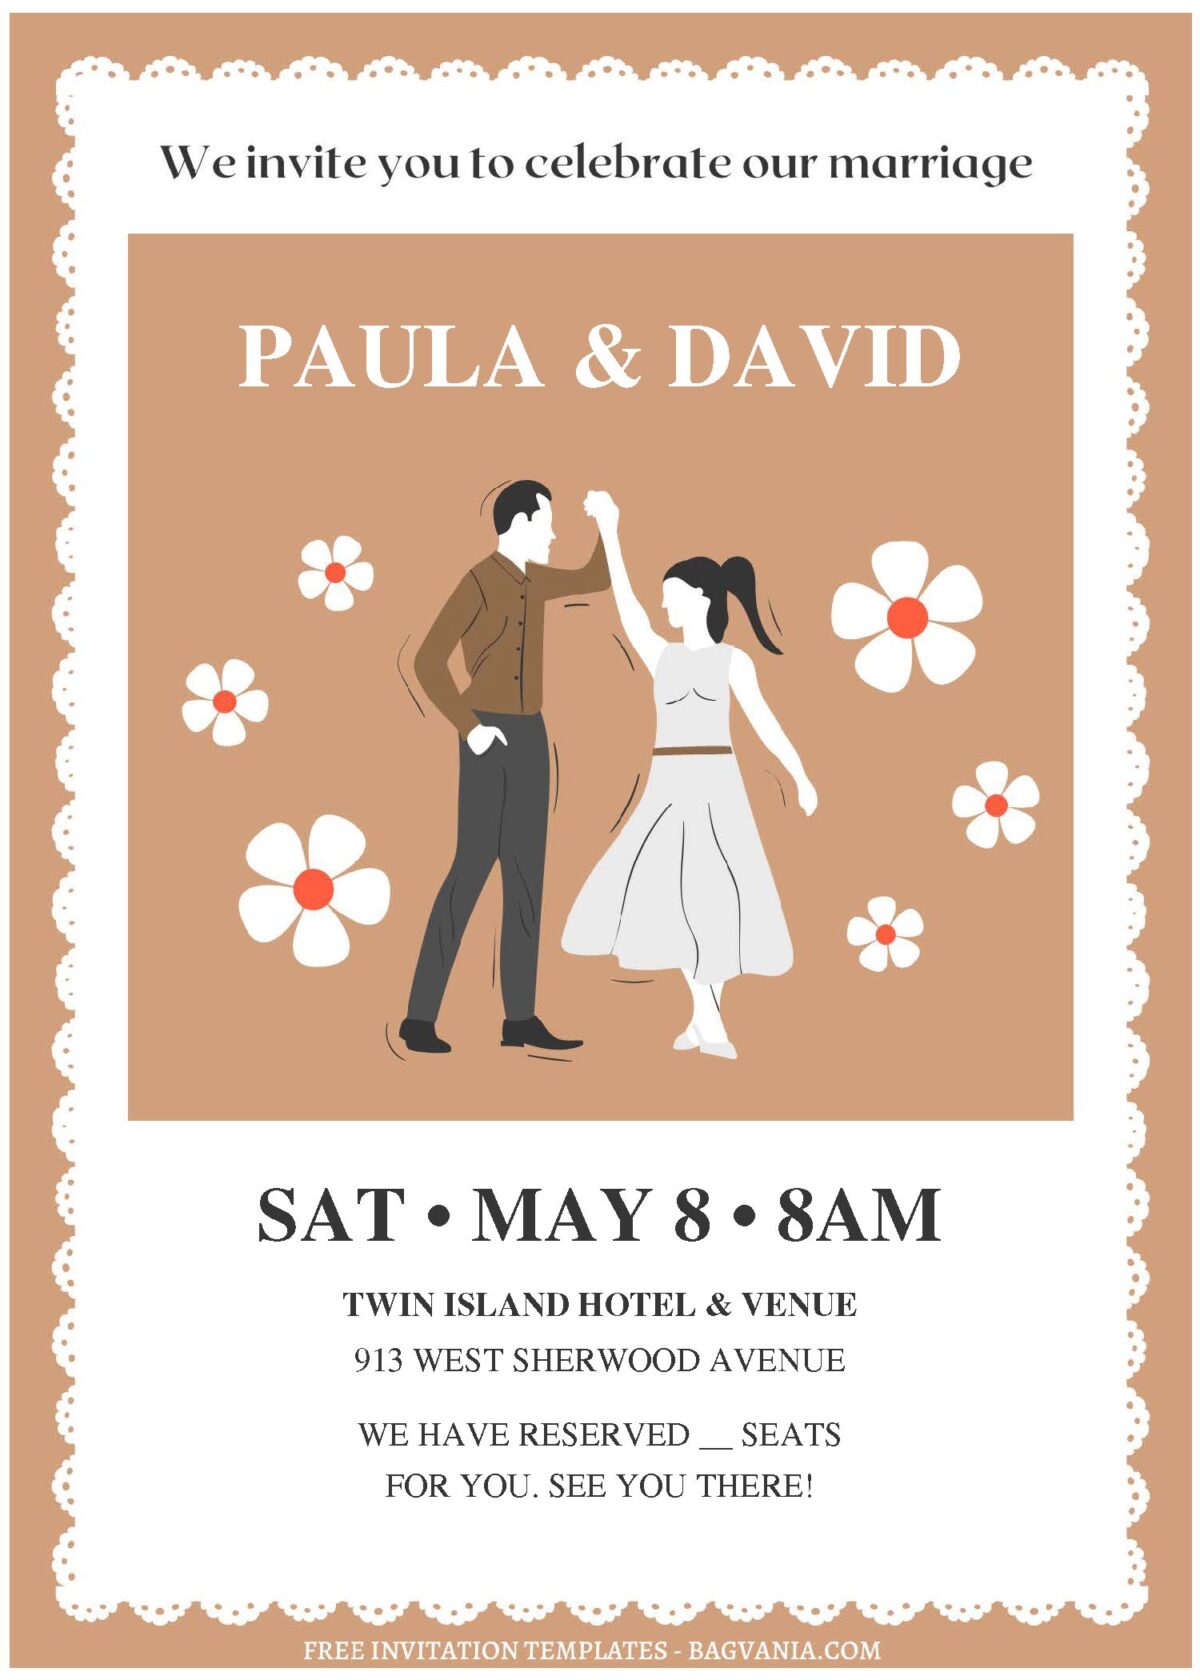 (Free Editable PDF) Creative And Quirky Wedding Invitation Templates A